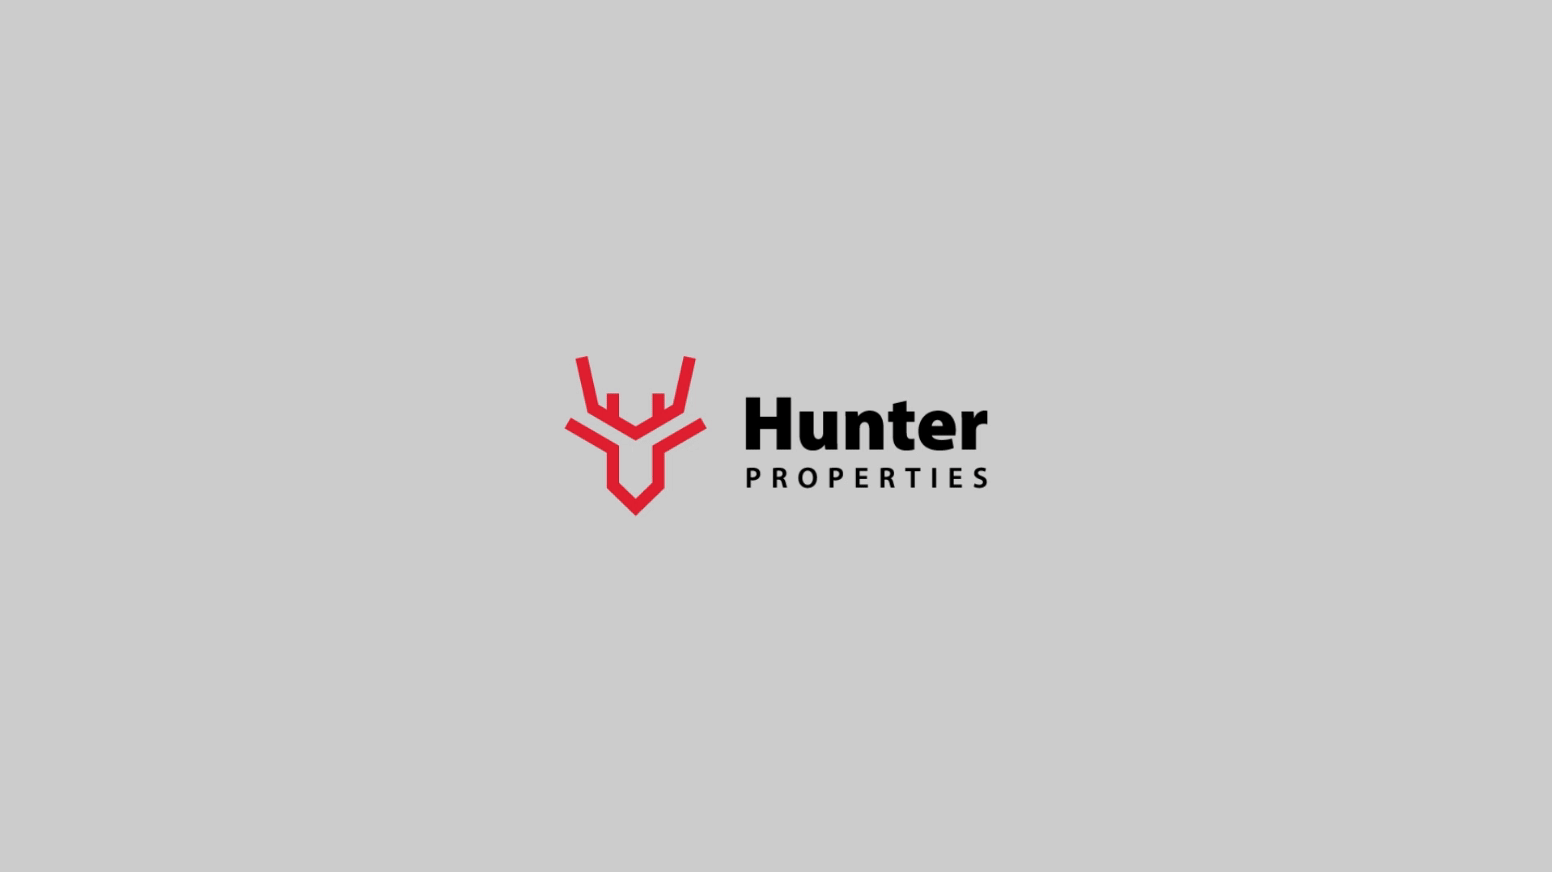 Hunter Properties By Logofarmers Studio